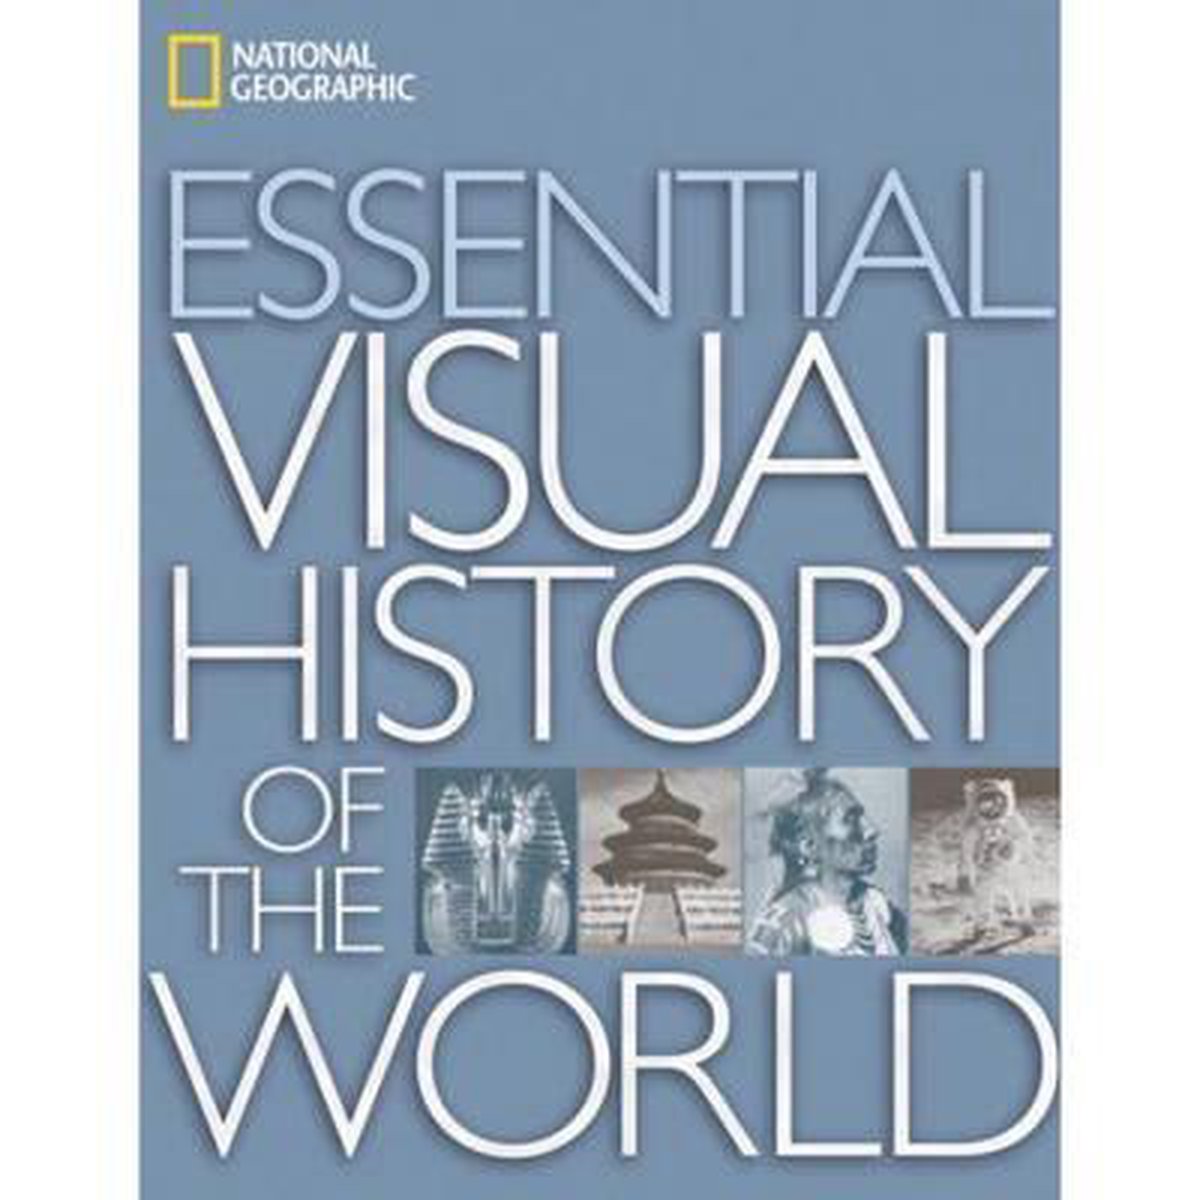 Essential Visual History